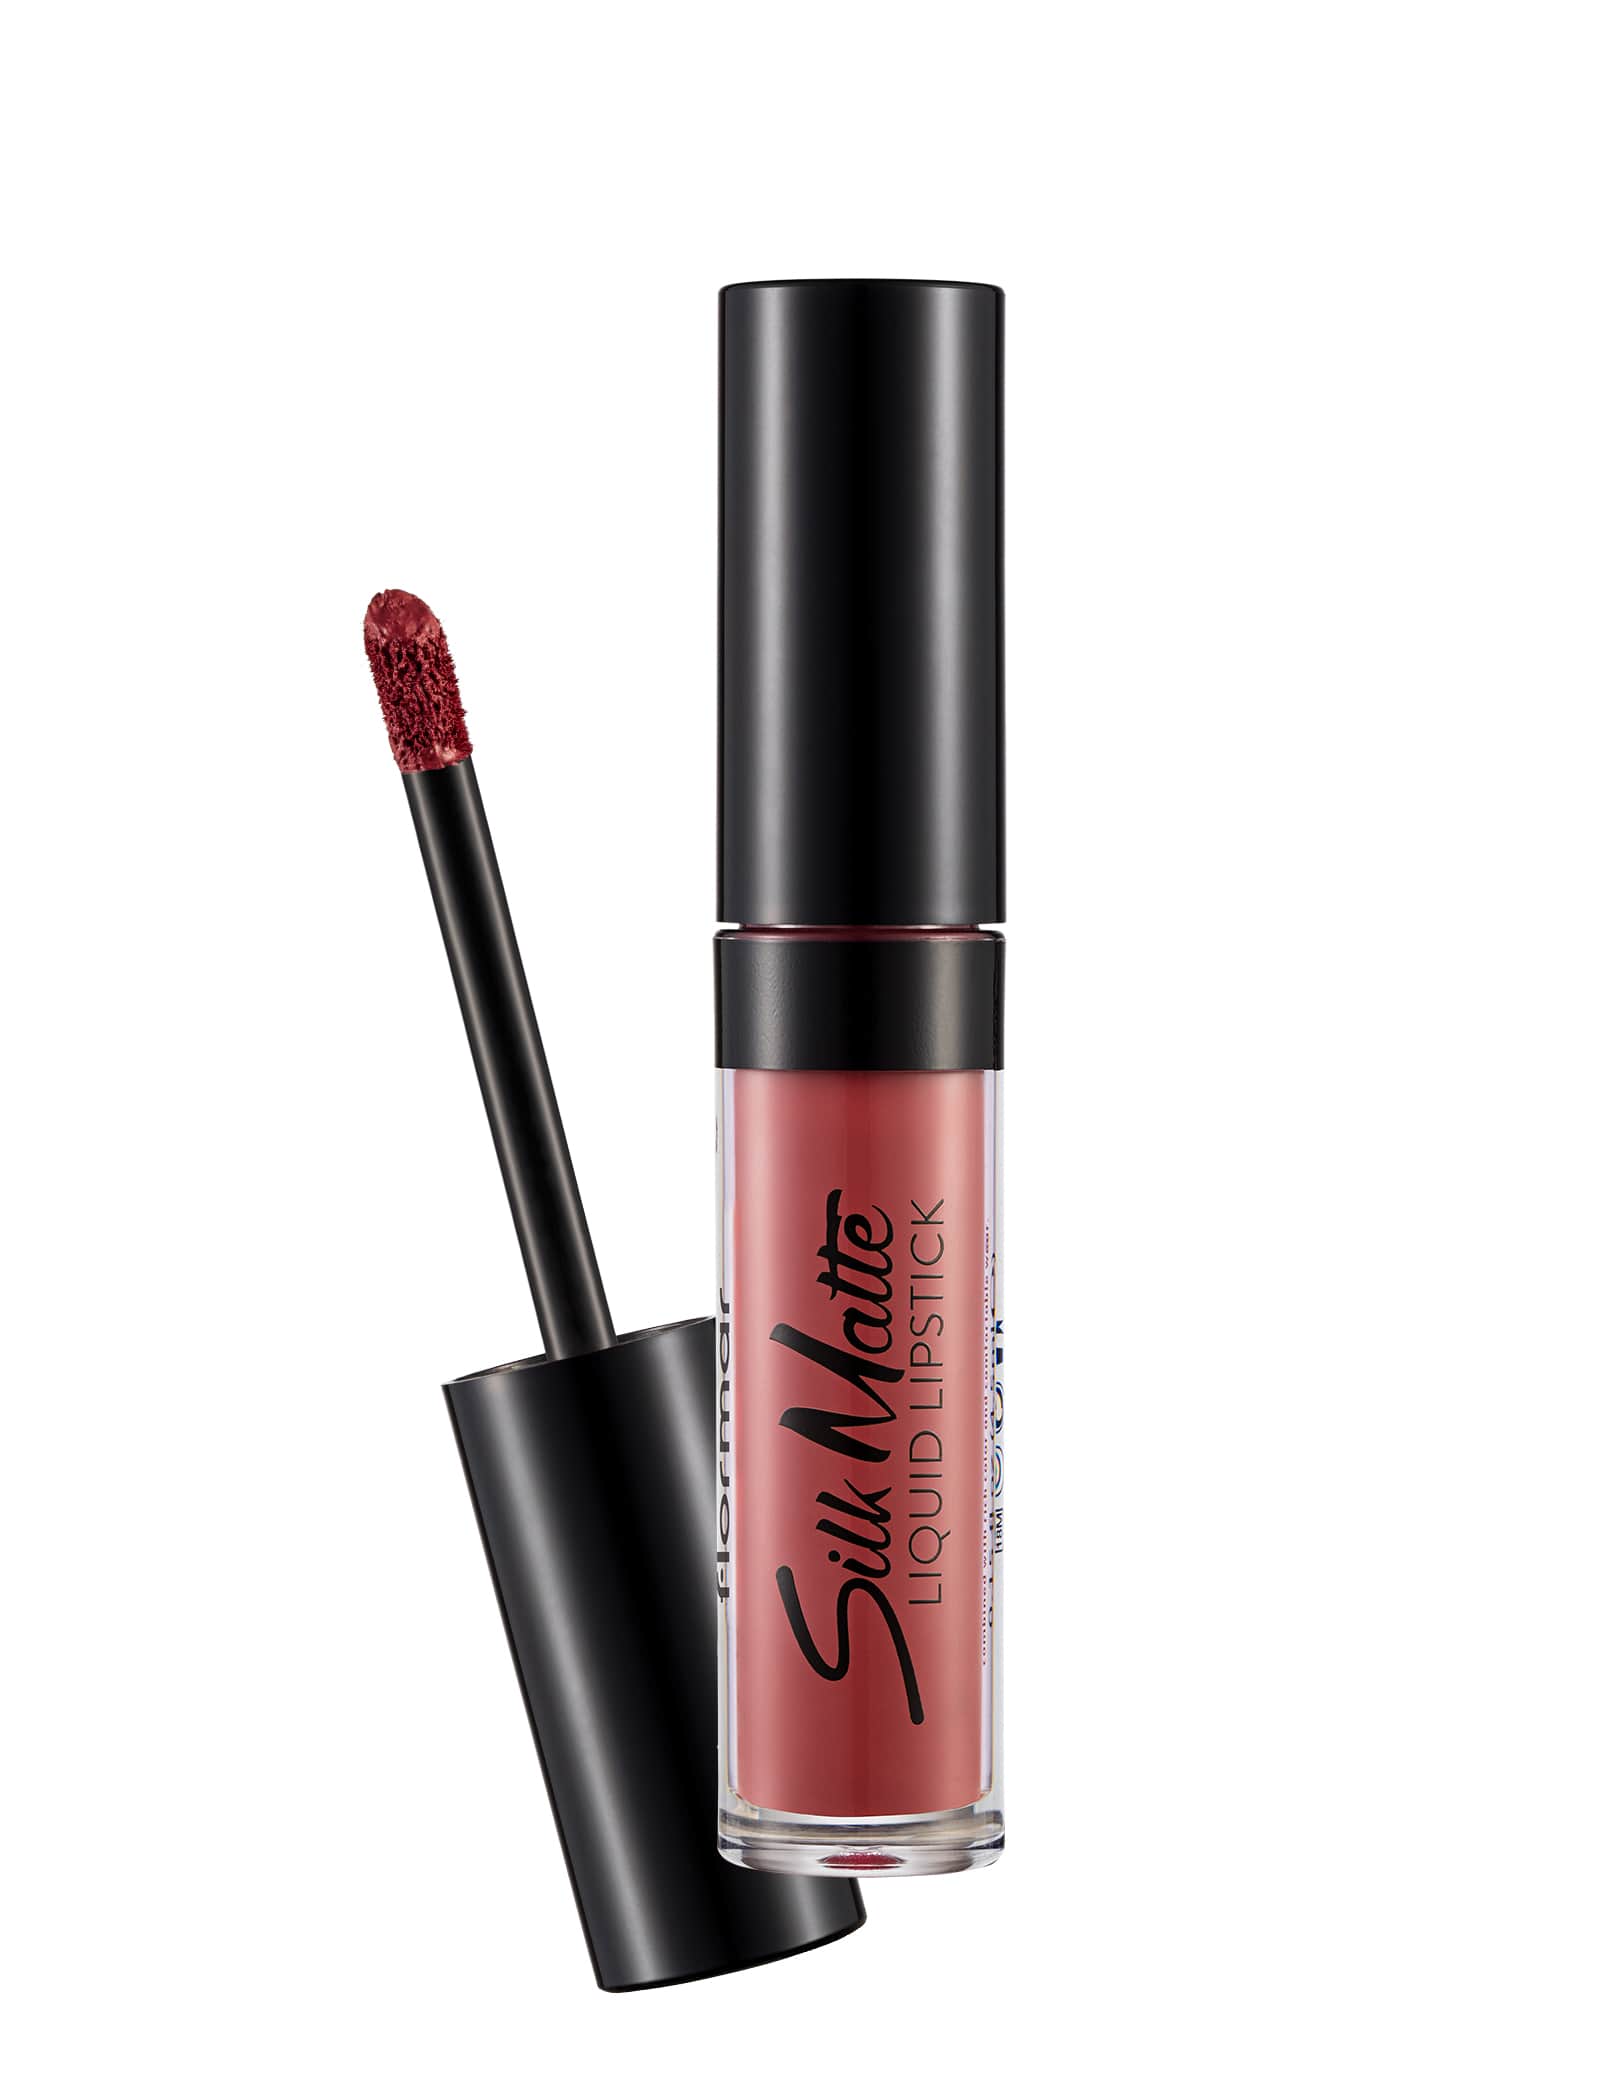 Silk Matte Liquid Lipstick - 006 Cherry Blossom